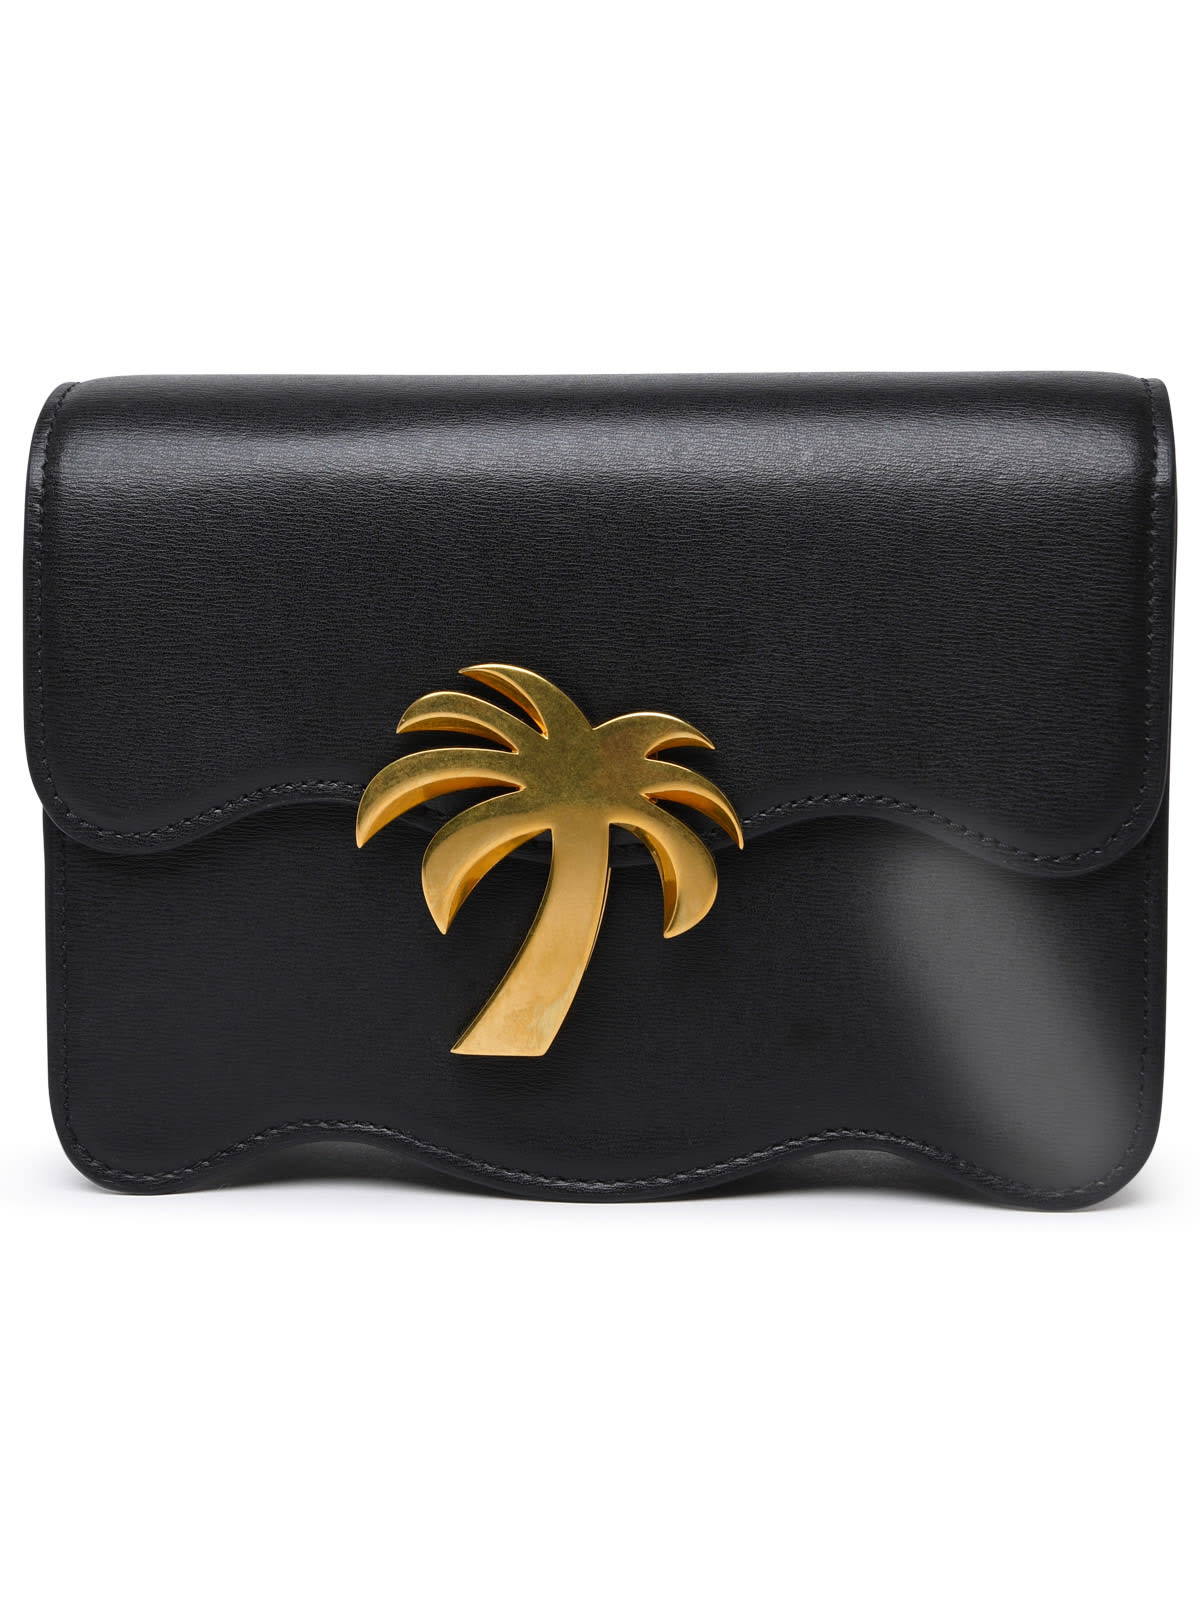 Shop Palm Angels Black Leather Palm Beach Bag